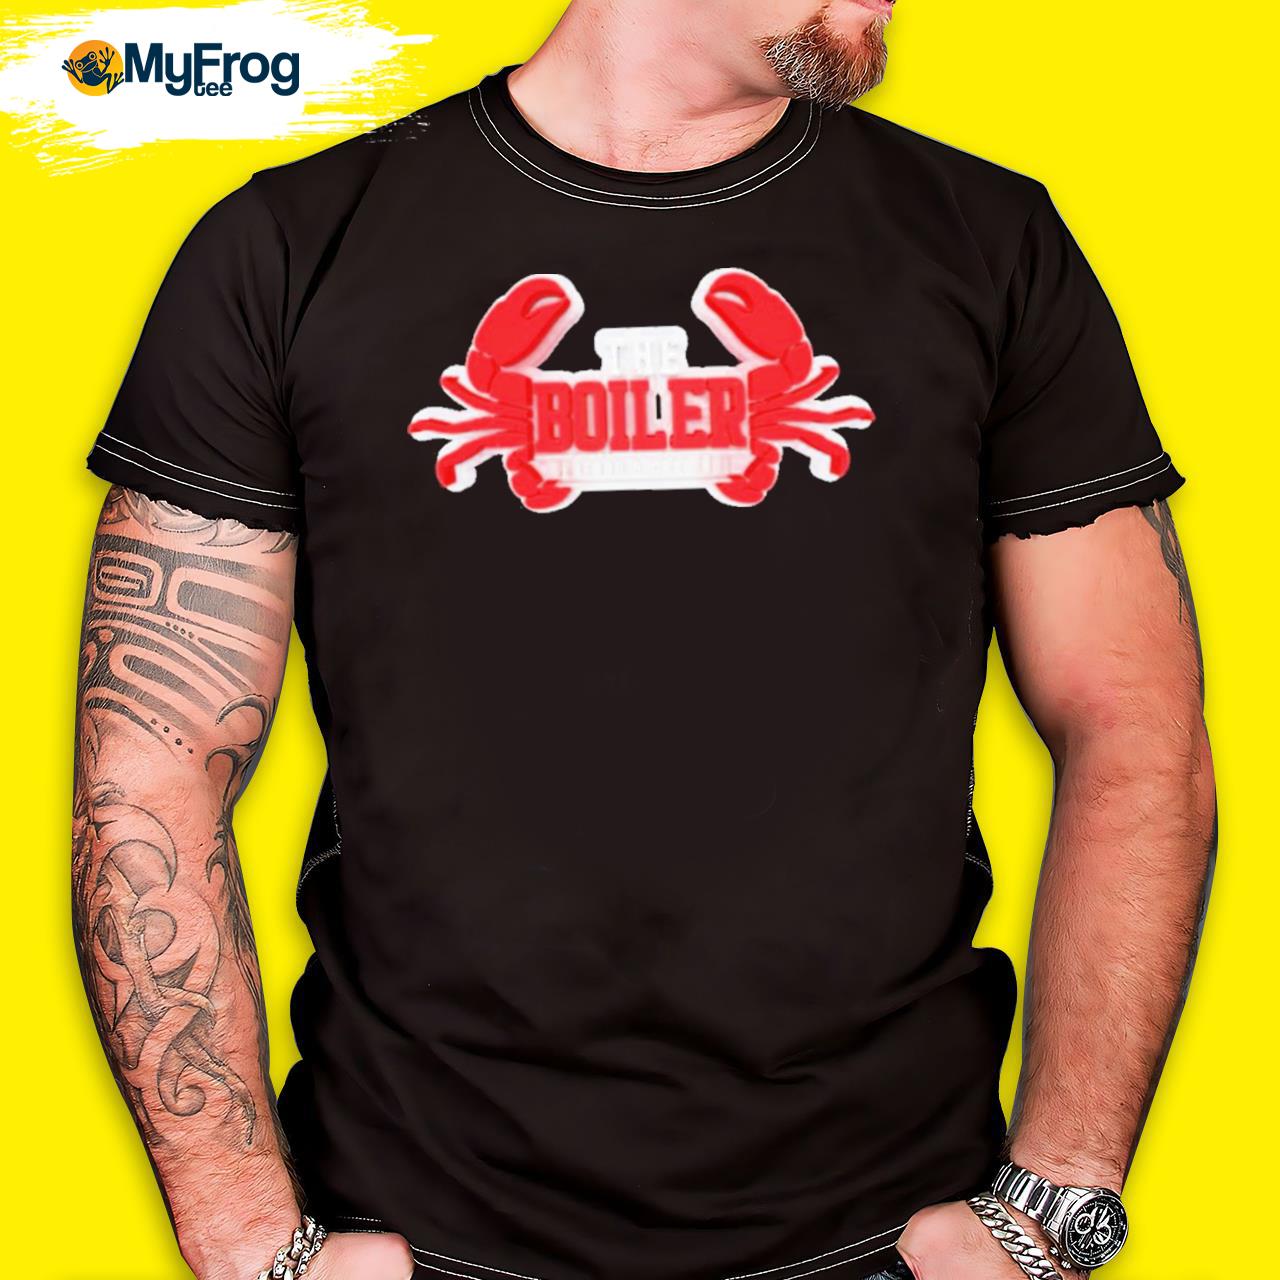 The Boiler Seafood & Crab Boil Shirt